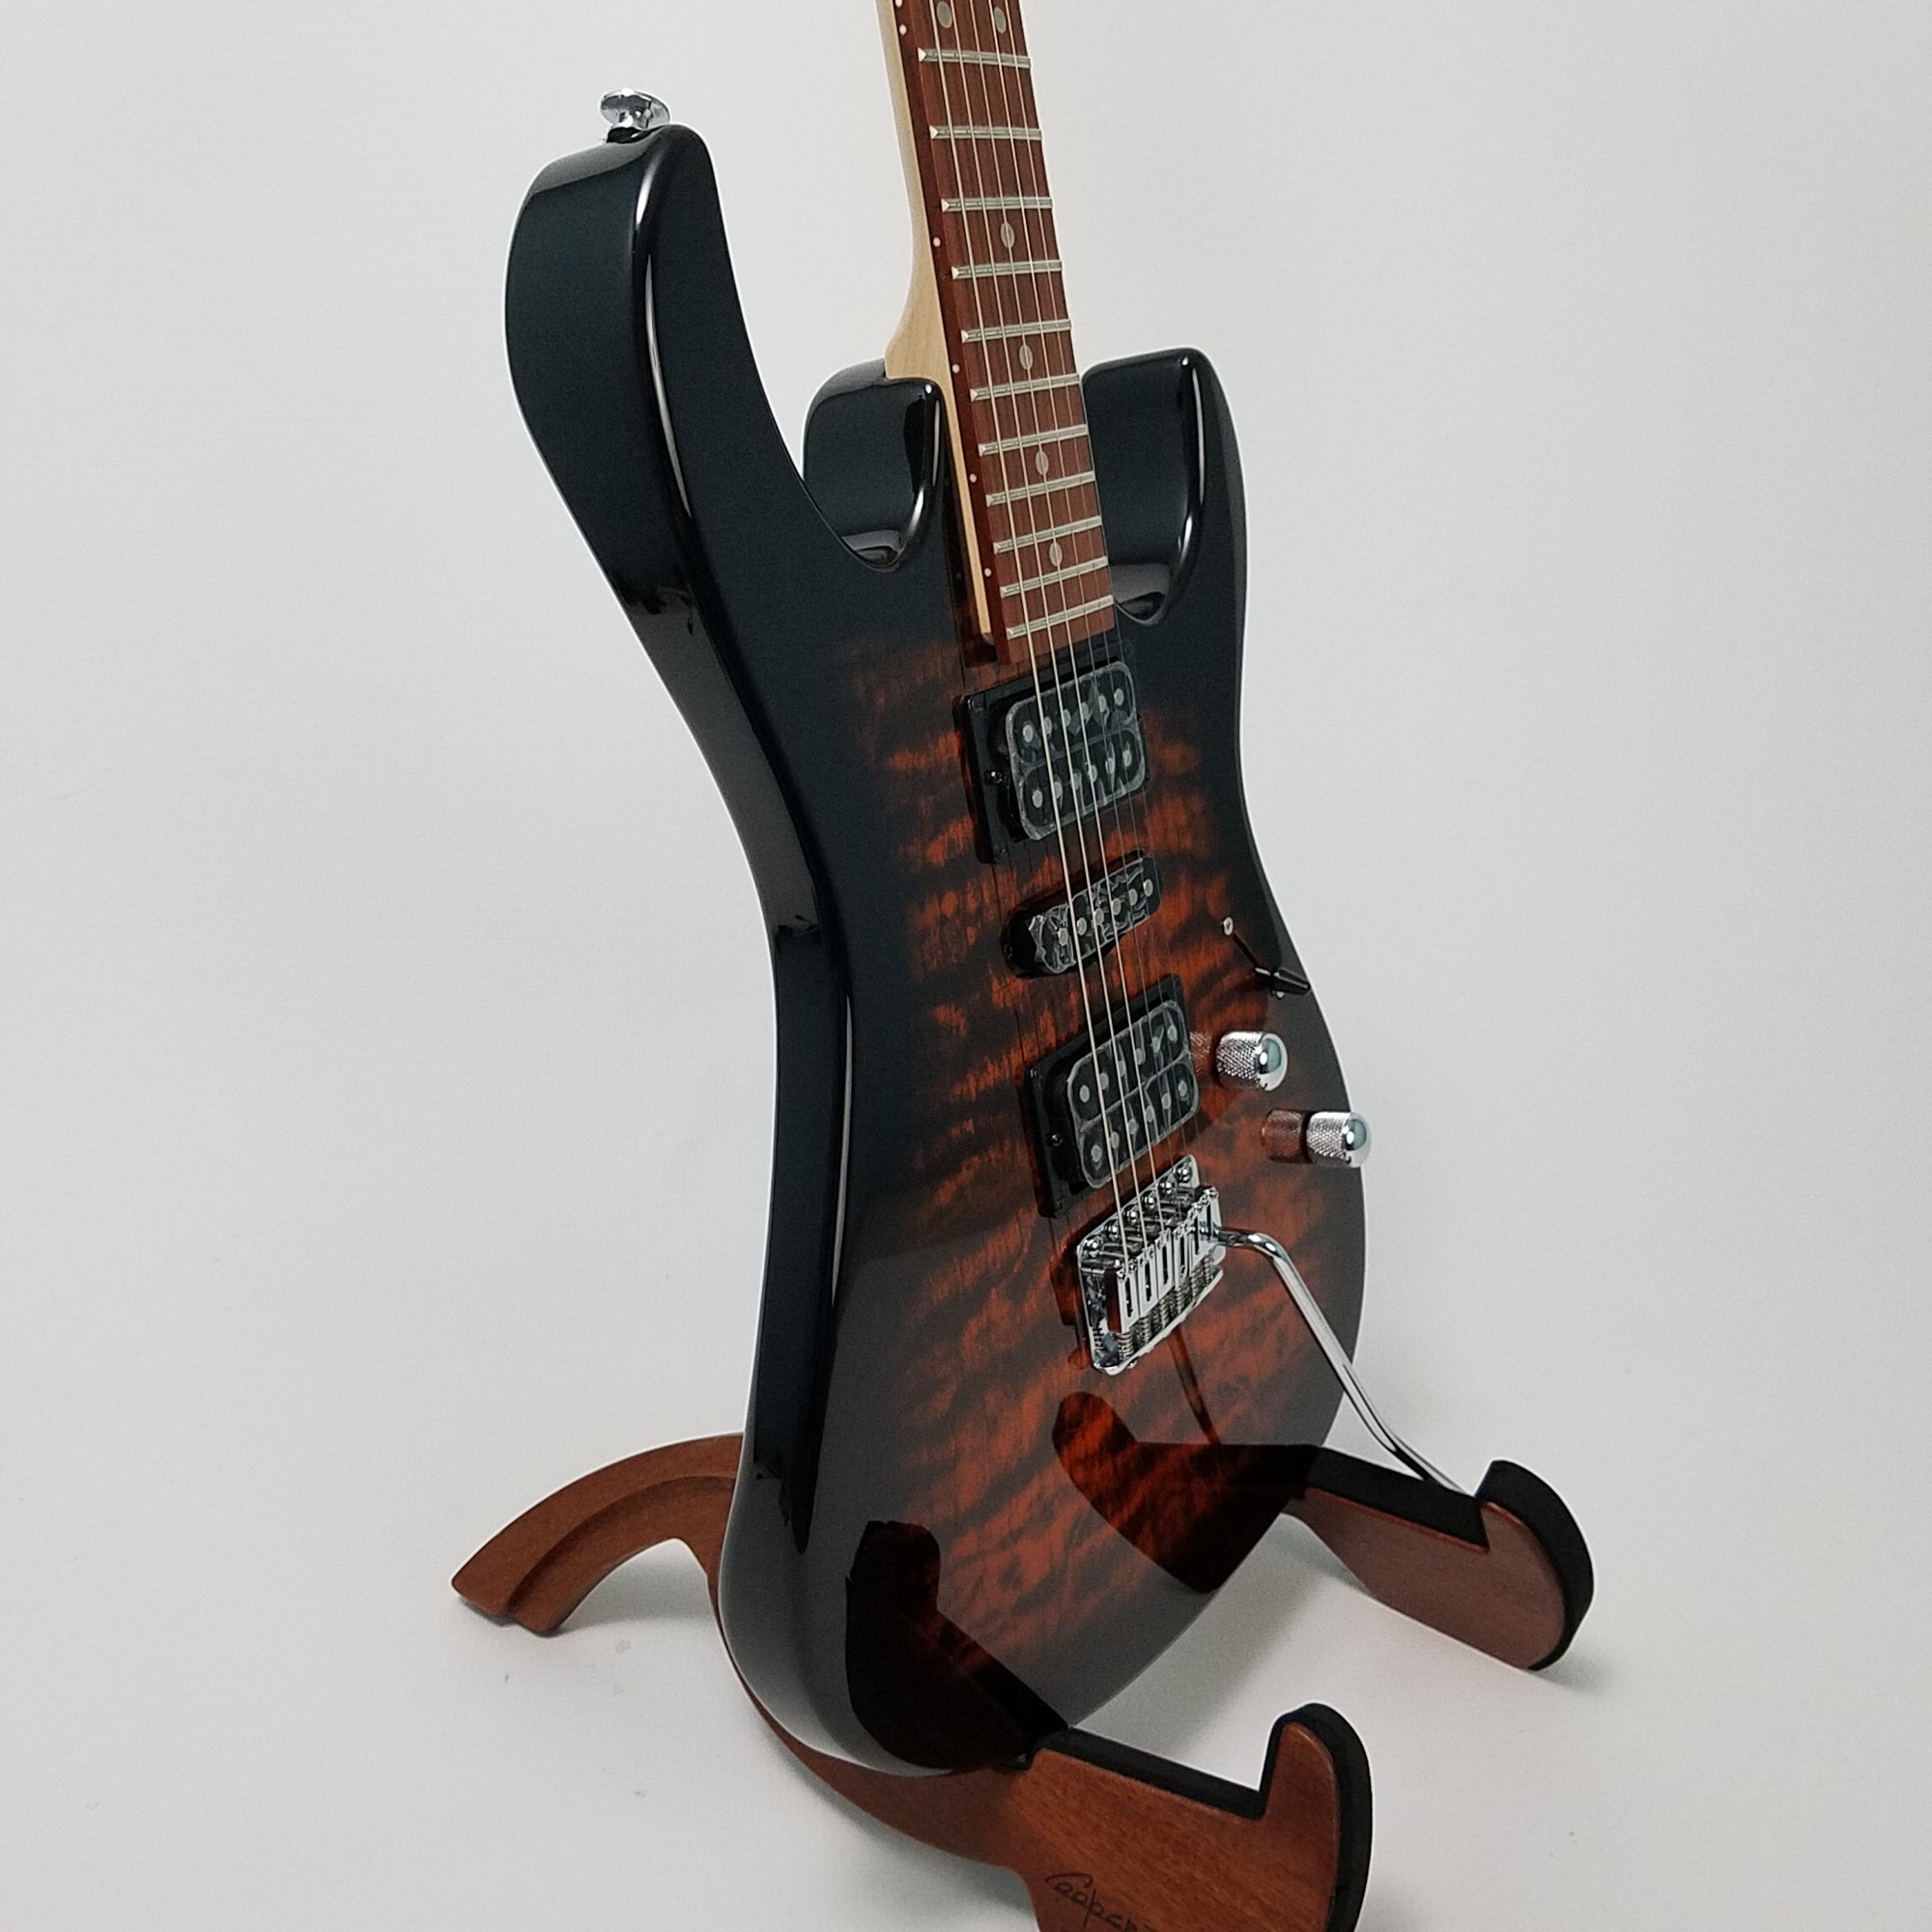 Ibanez GRX70QASB Gio Quilted Electric Guitar - Sunburst